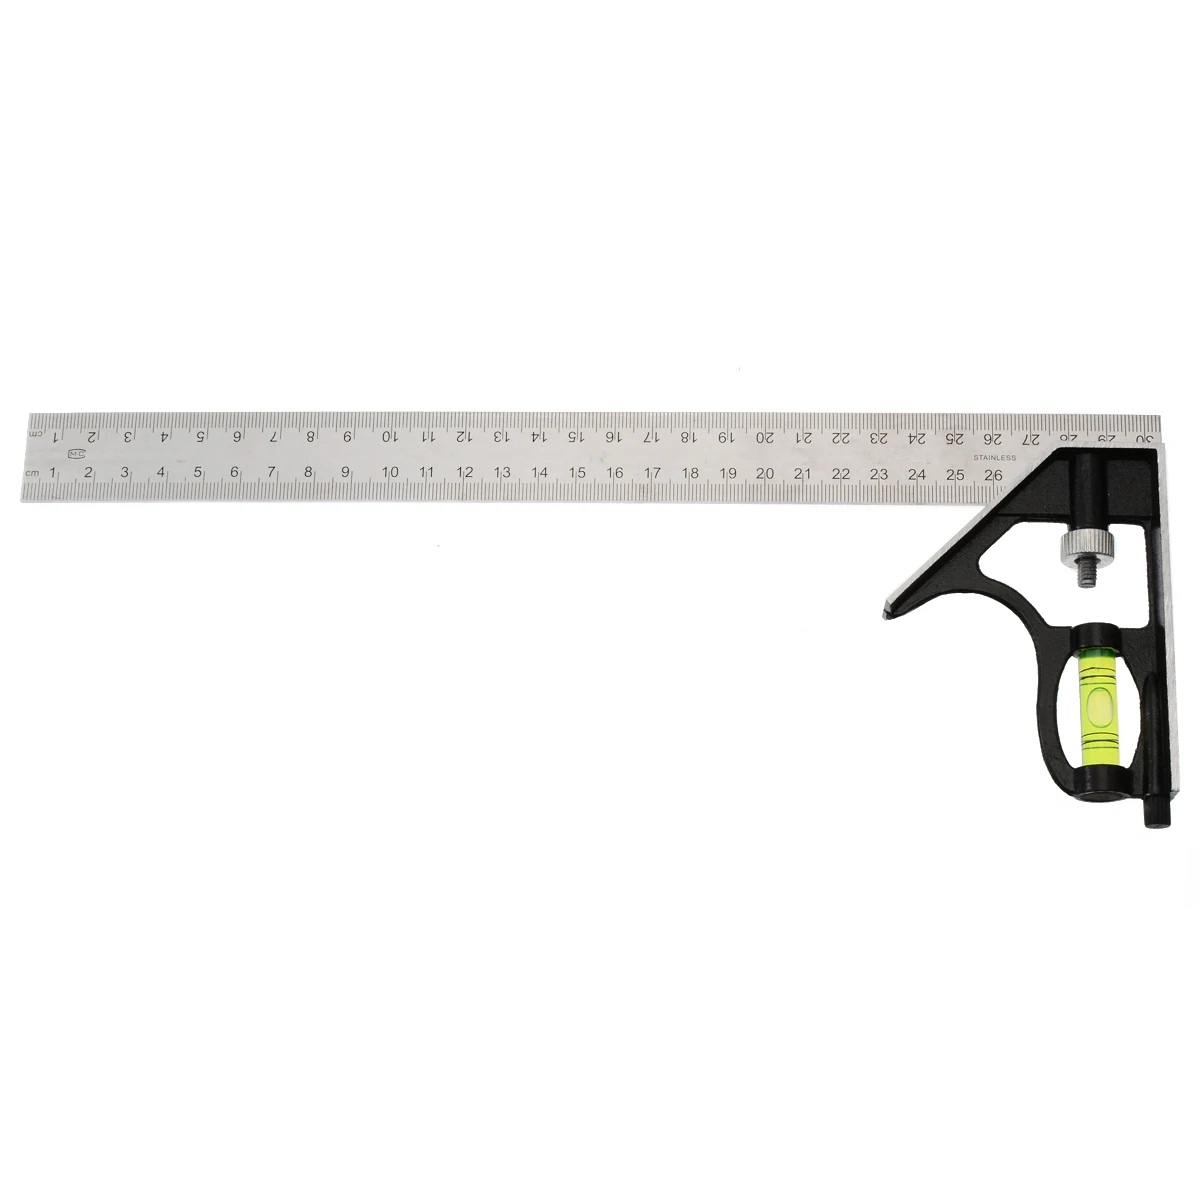 300mm 12" Adjustable Engineers Combination Square Set Kit Right Angle Ruler LJ 